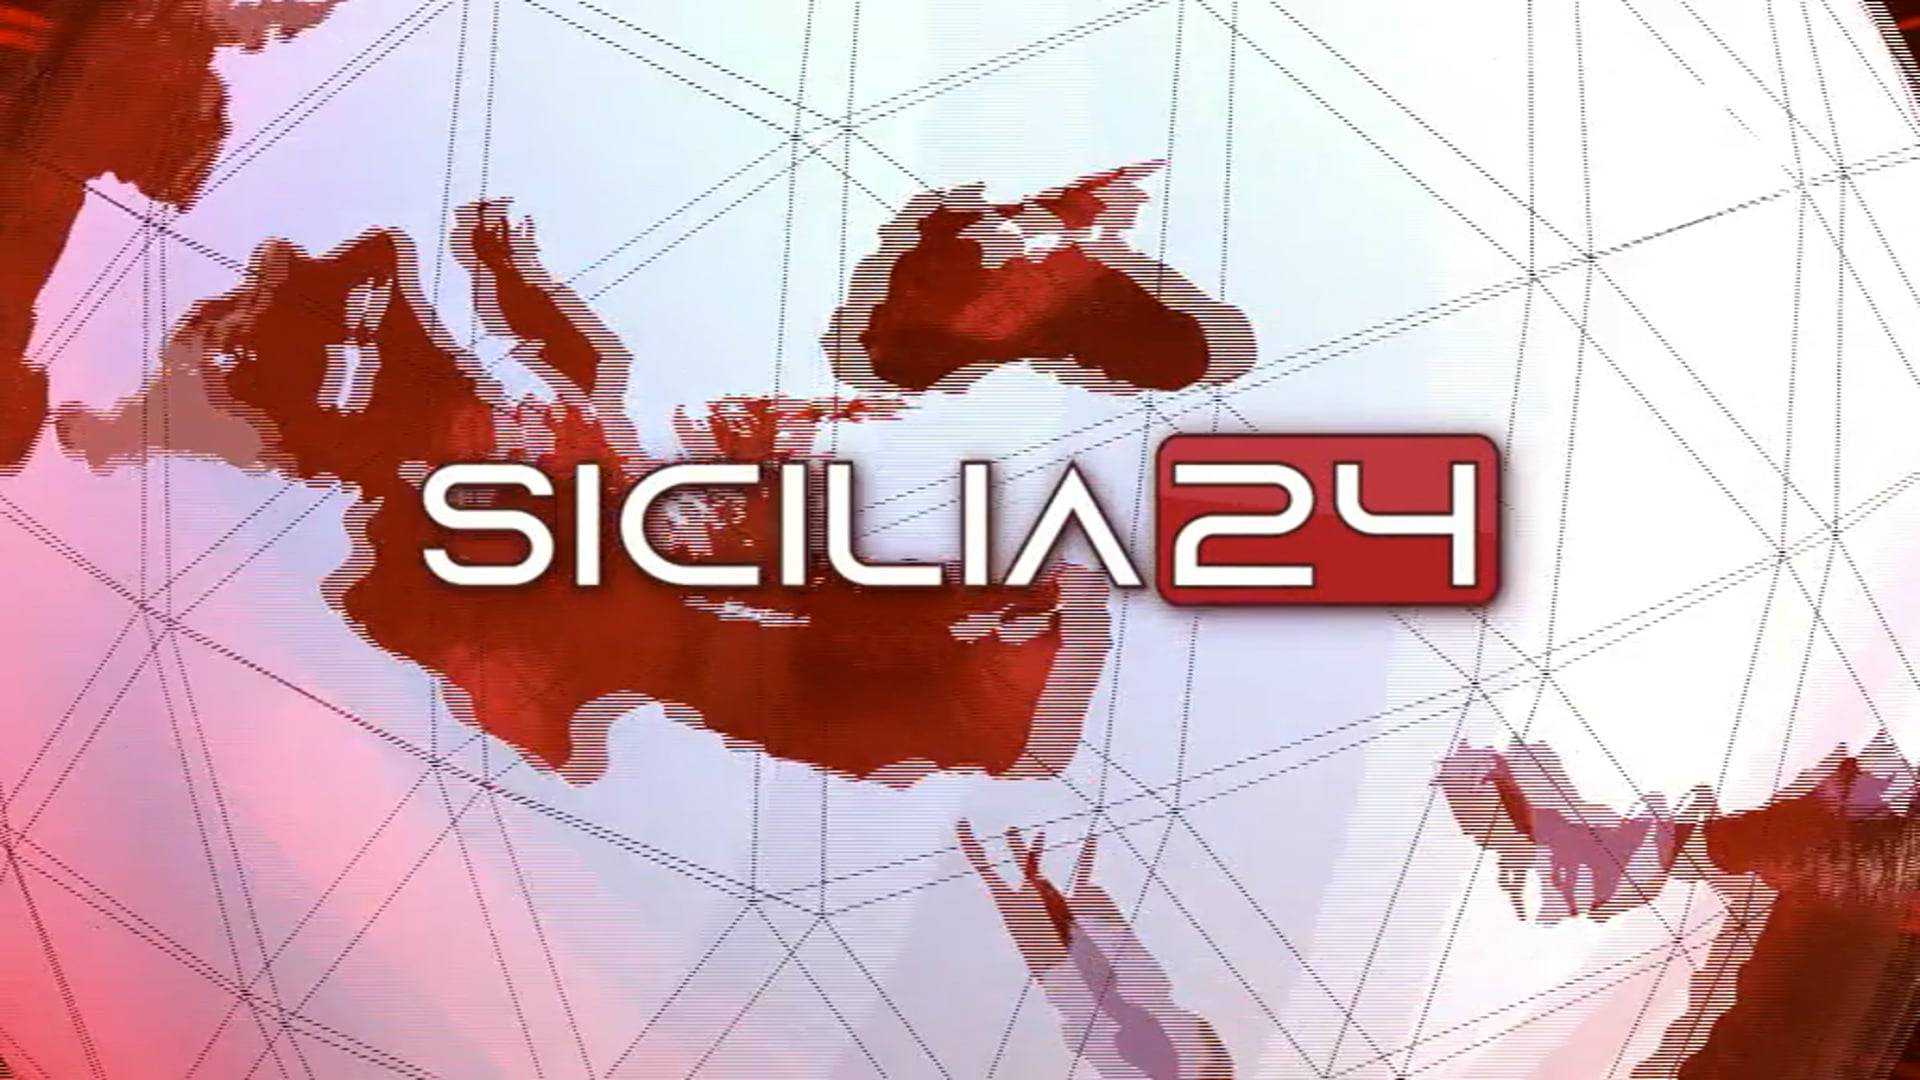 sicilia24-rassegna-stampa-26-marzo-2022-vimeo-thumbnail.jpg